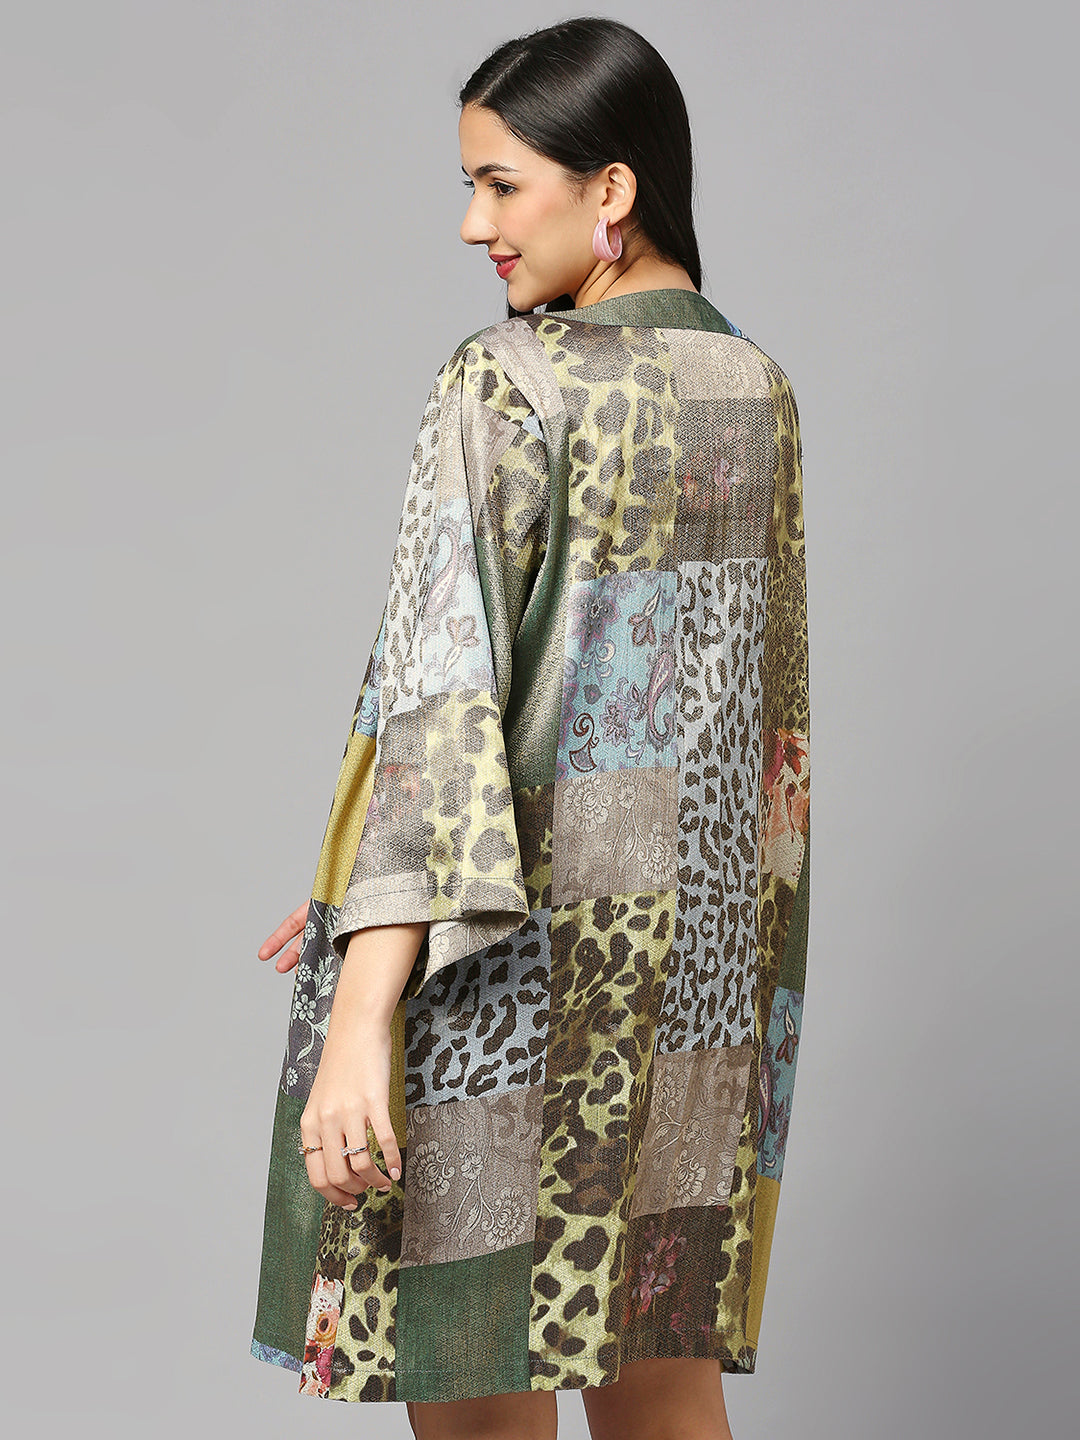 Animal Patchwork Look Printed Kimono on Metallic Fabric